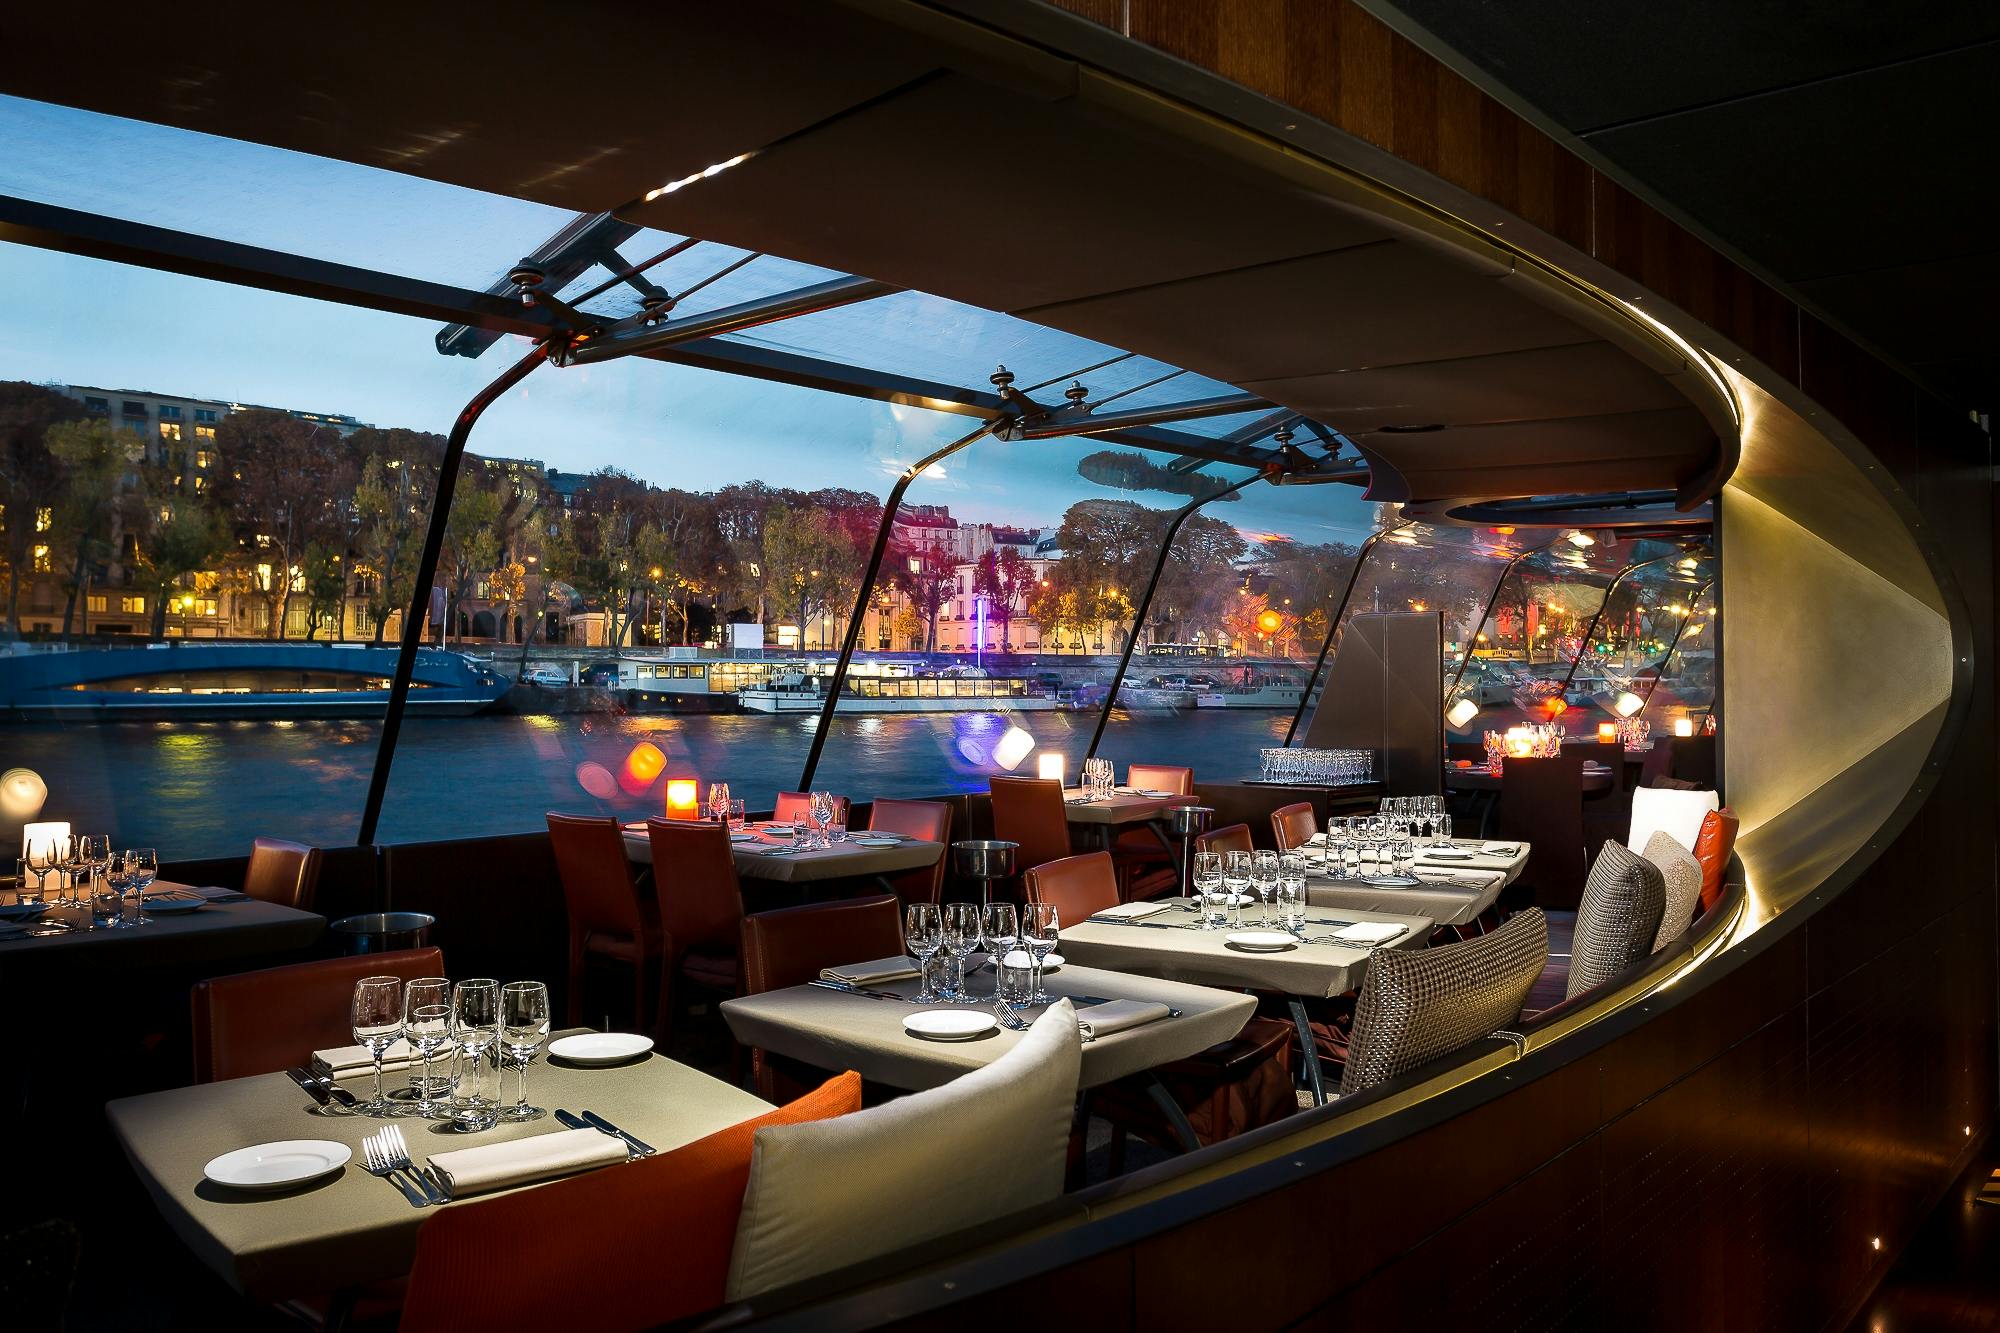 Dinner-Bootsfahrt mit Pariser Highlights